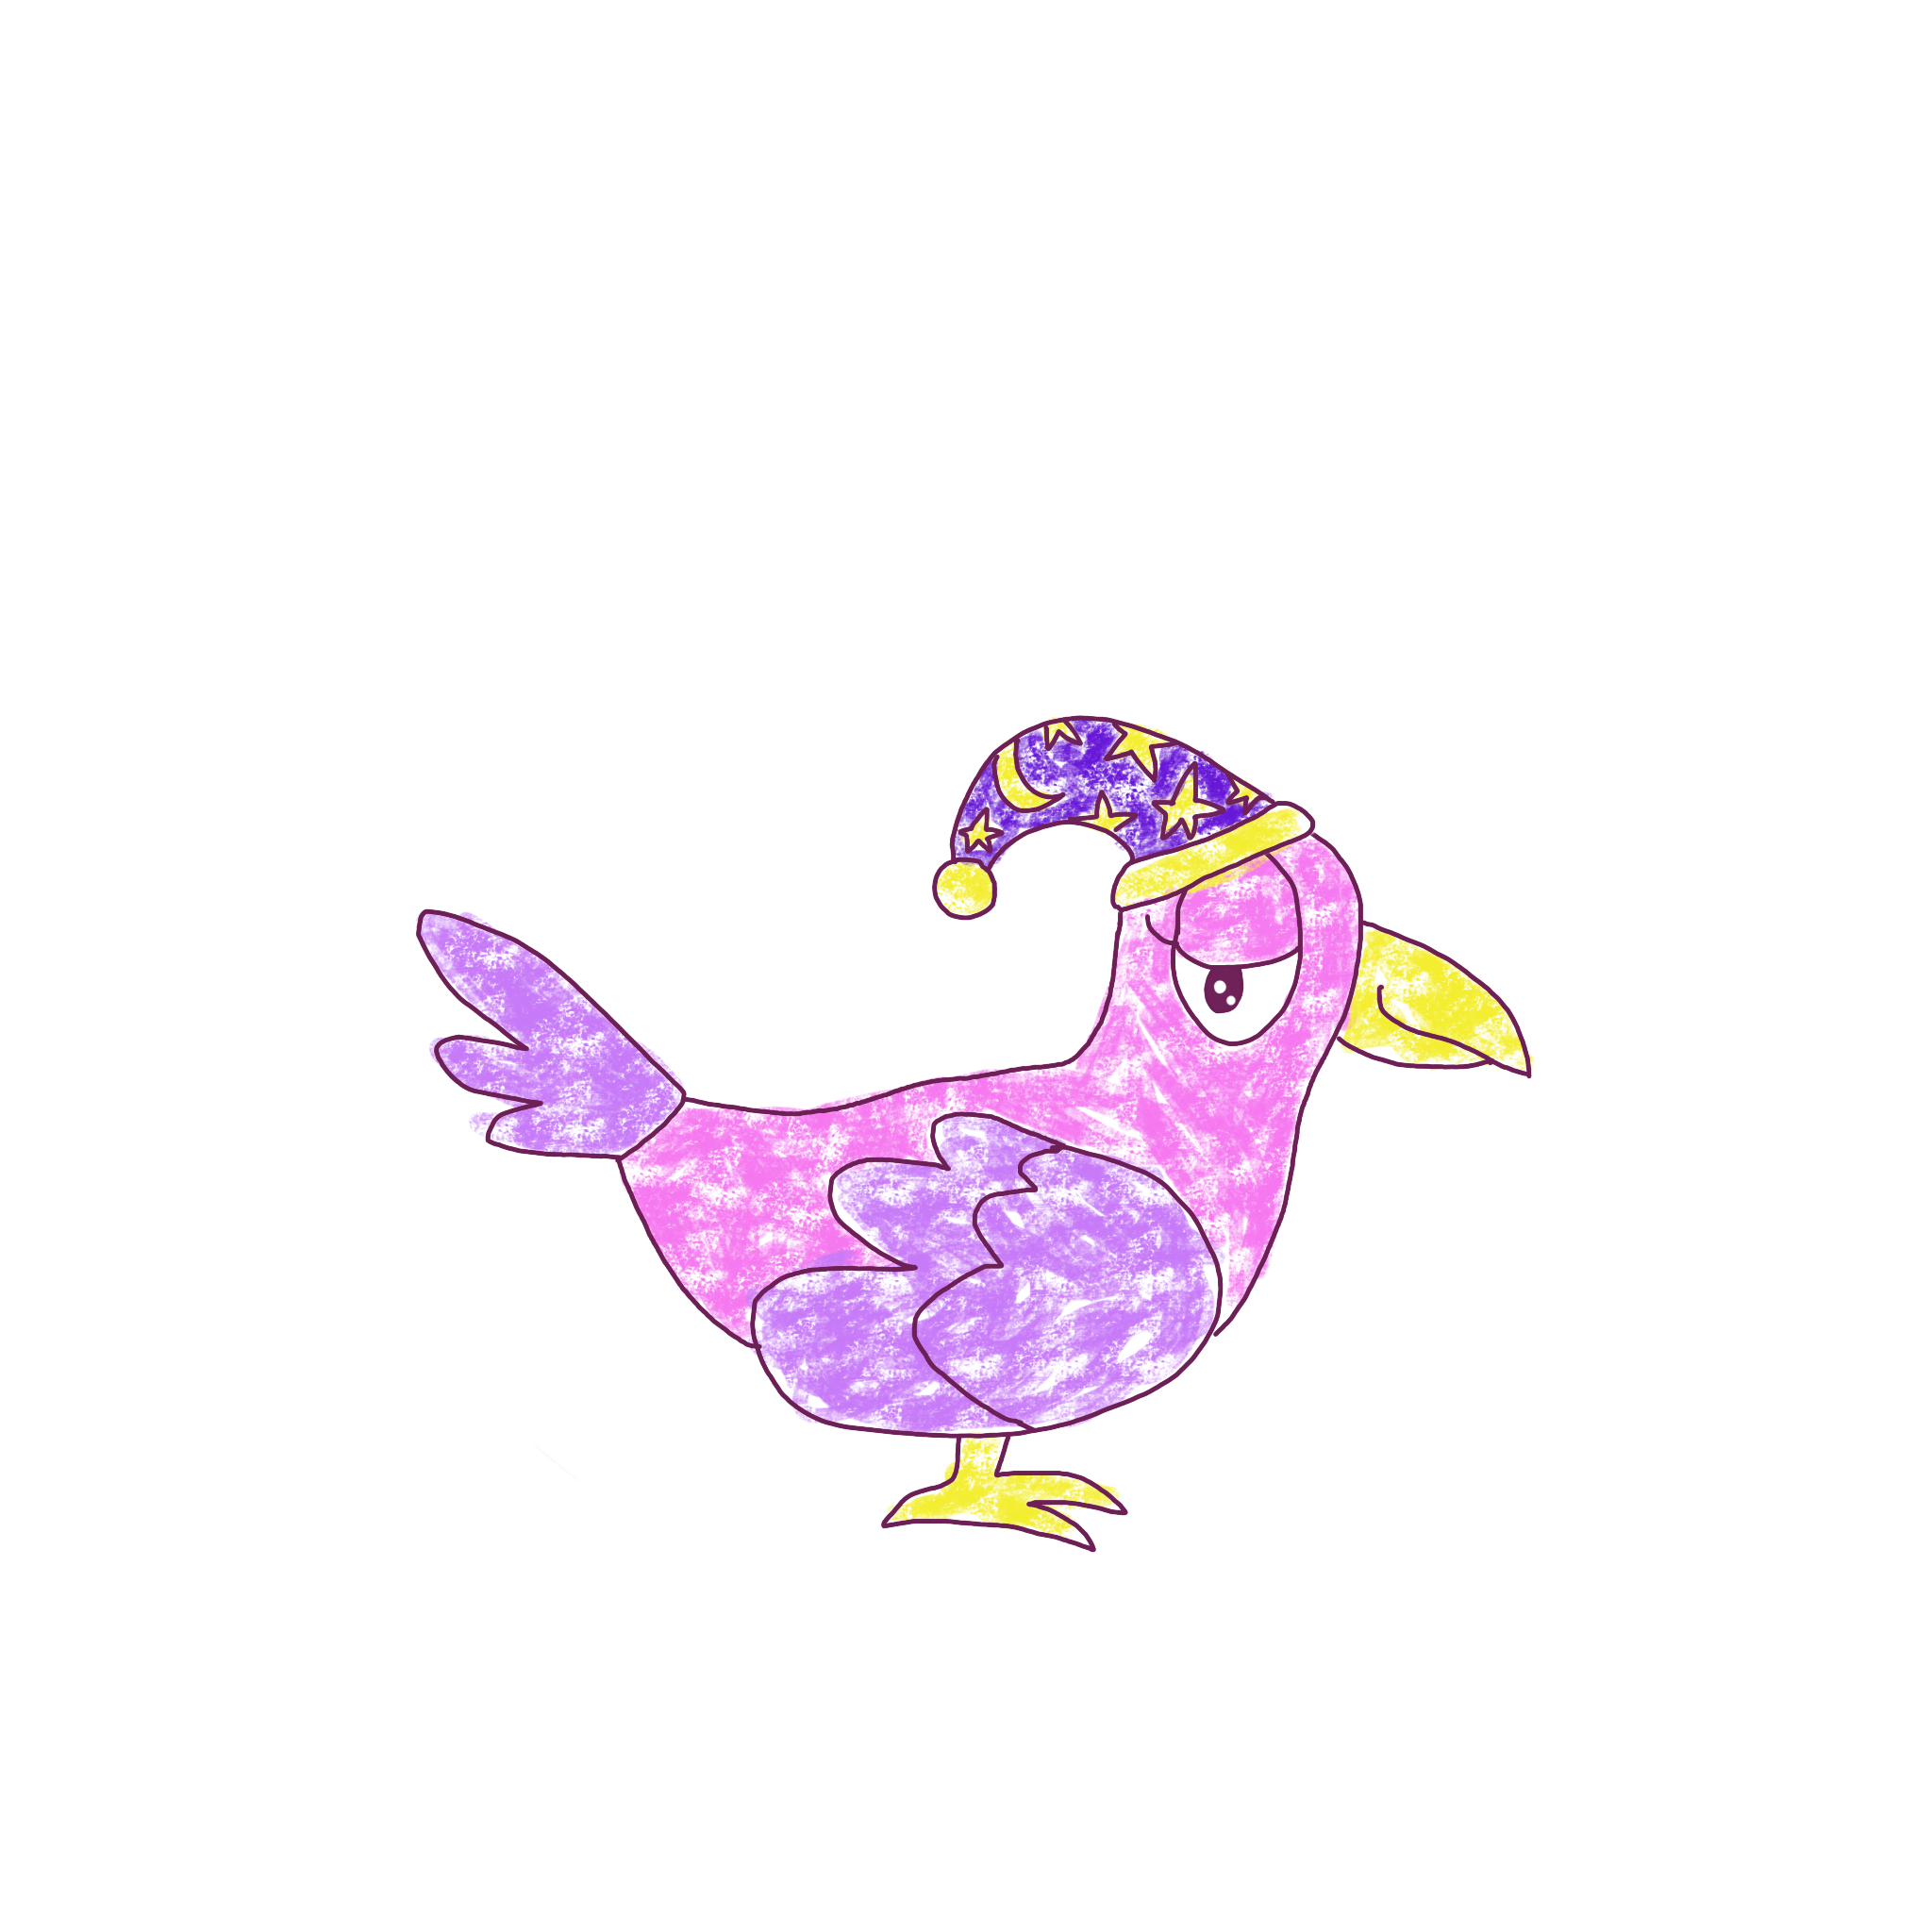 Opila Bird Vector, Bird Cartoon, Cute Bird, Monster Birds PNG and Vector  with Transparent Background for Free Download